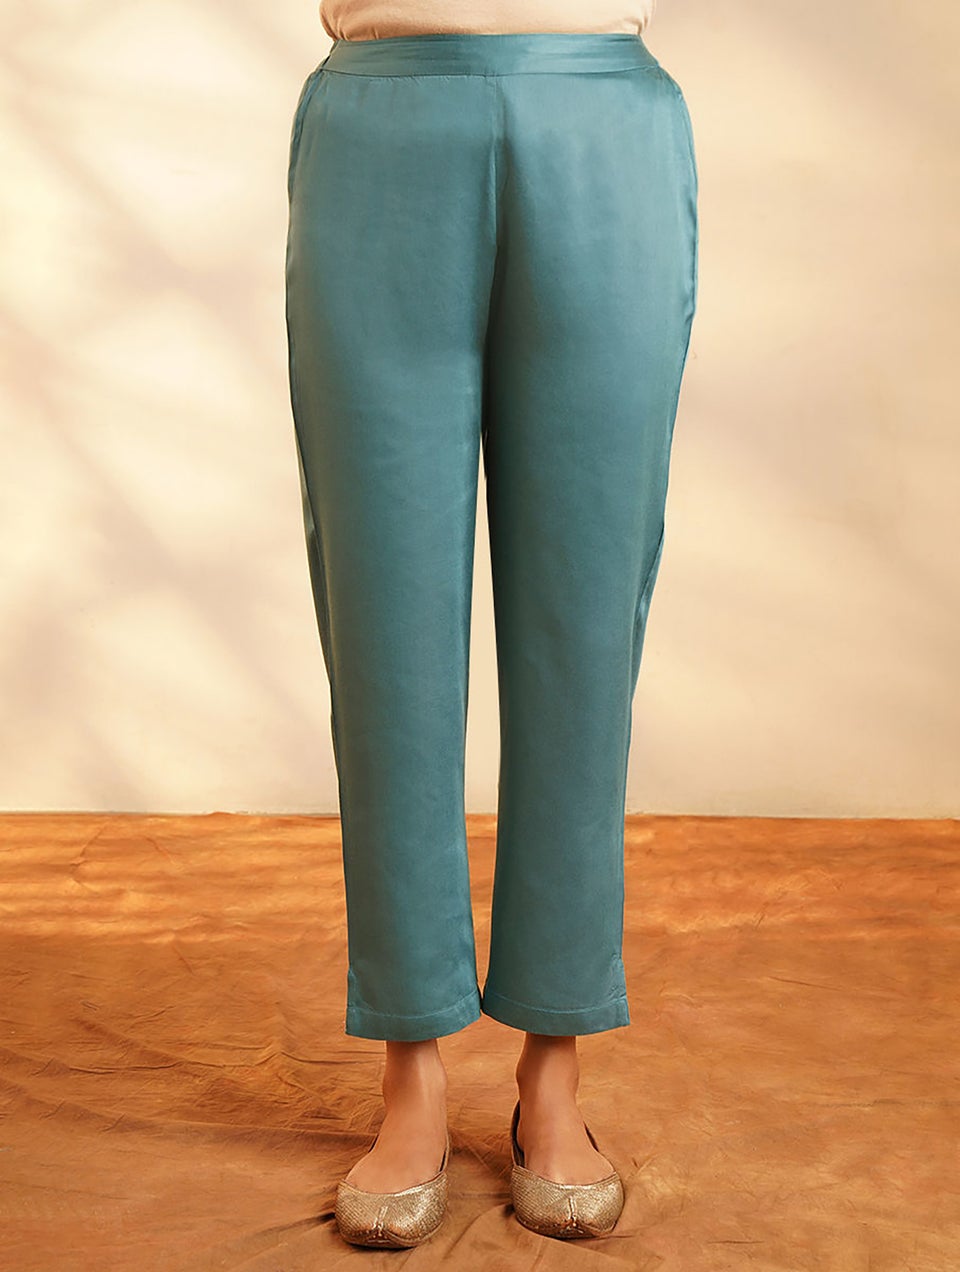 Teal Elasticated Waist Modal Pants - XS